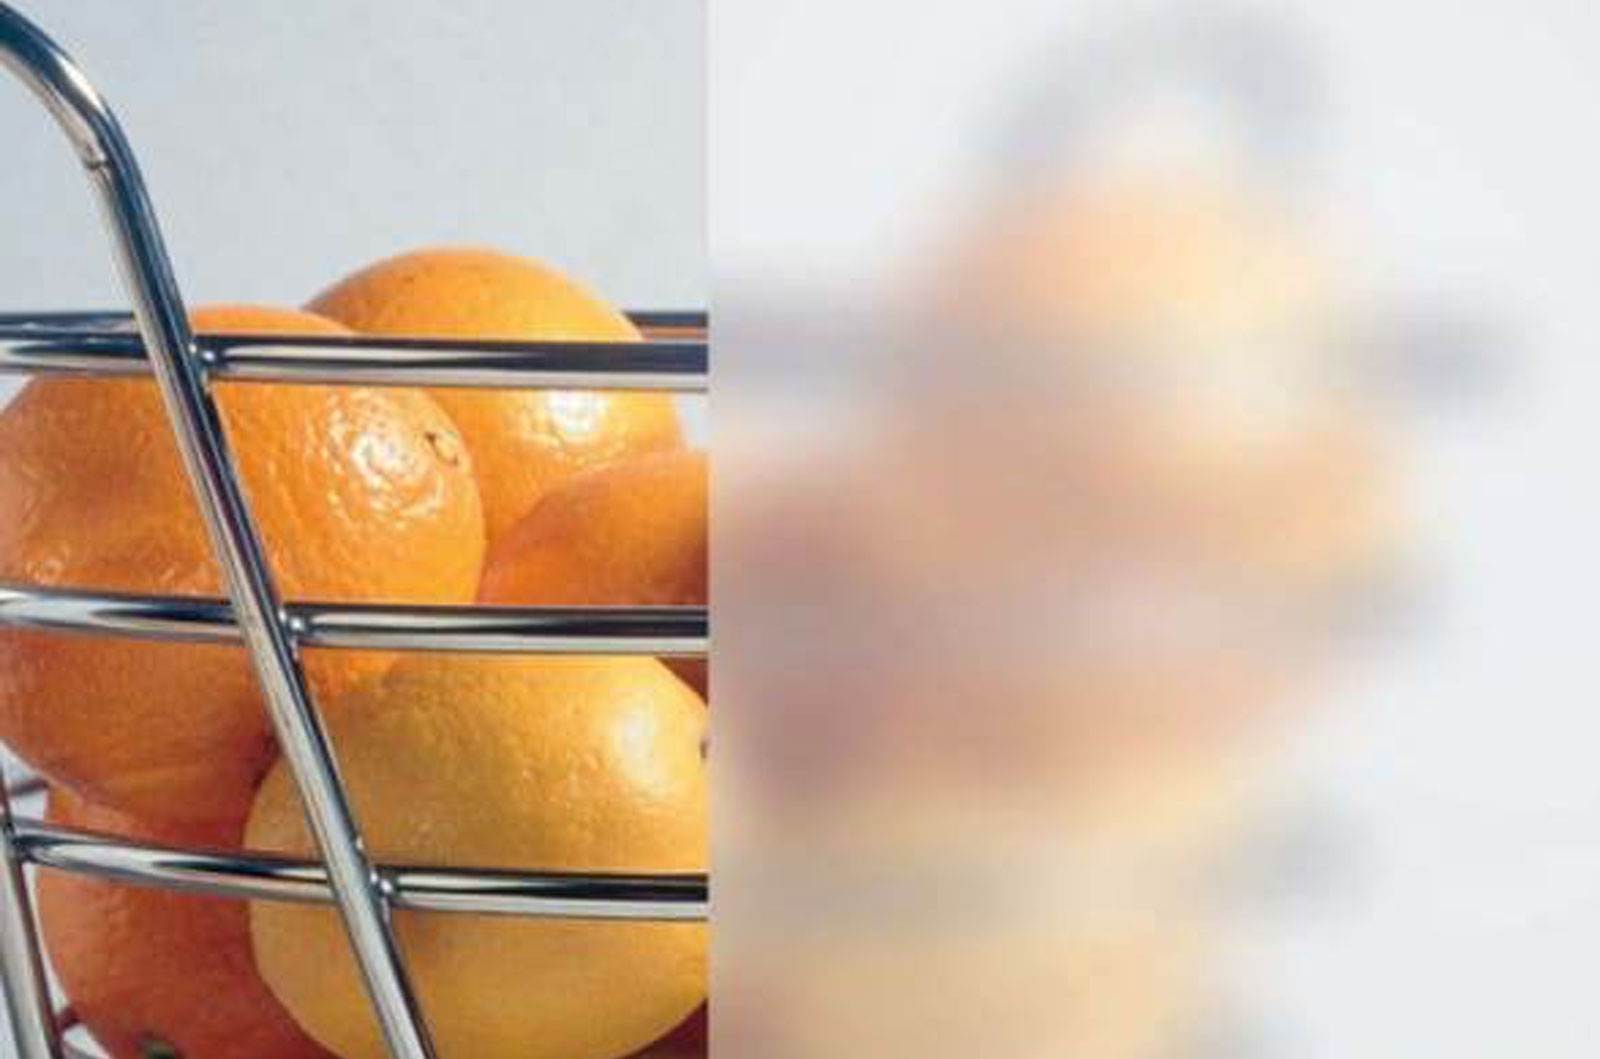 A metal basket full of oranges.